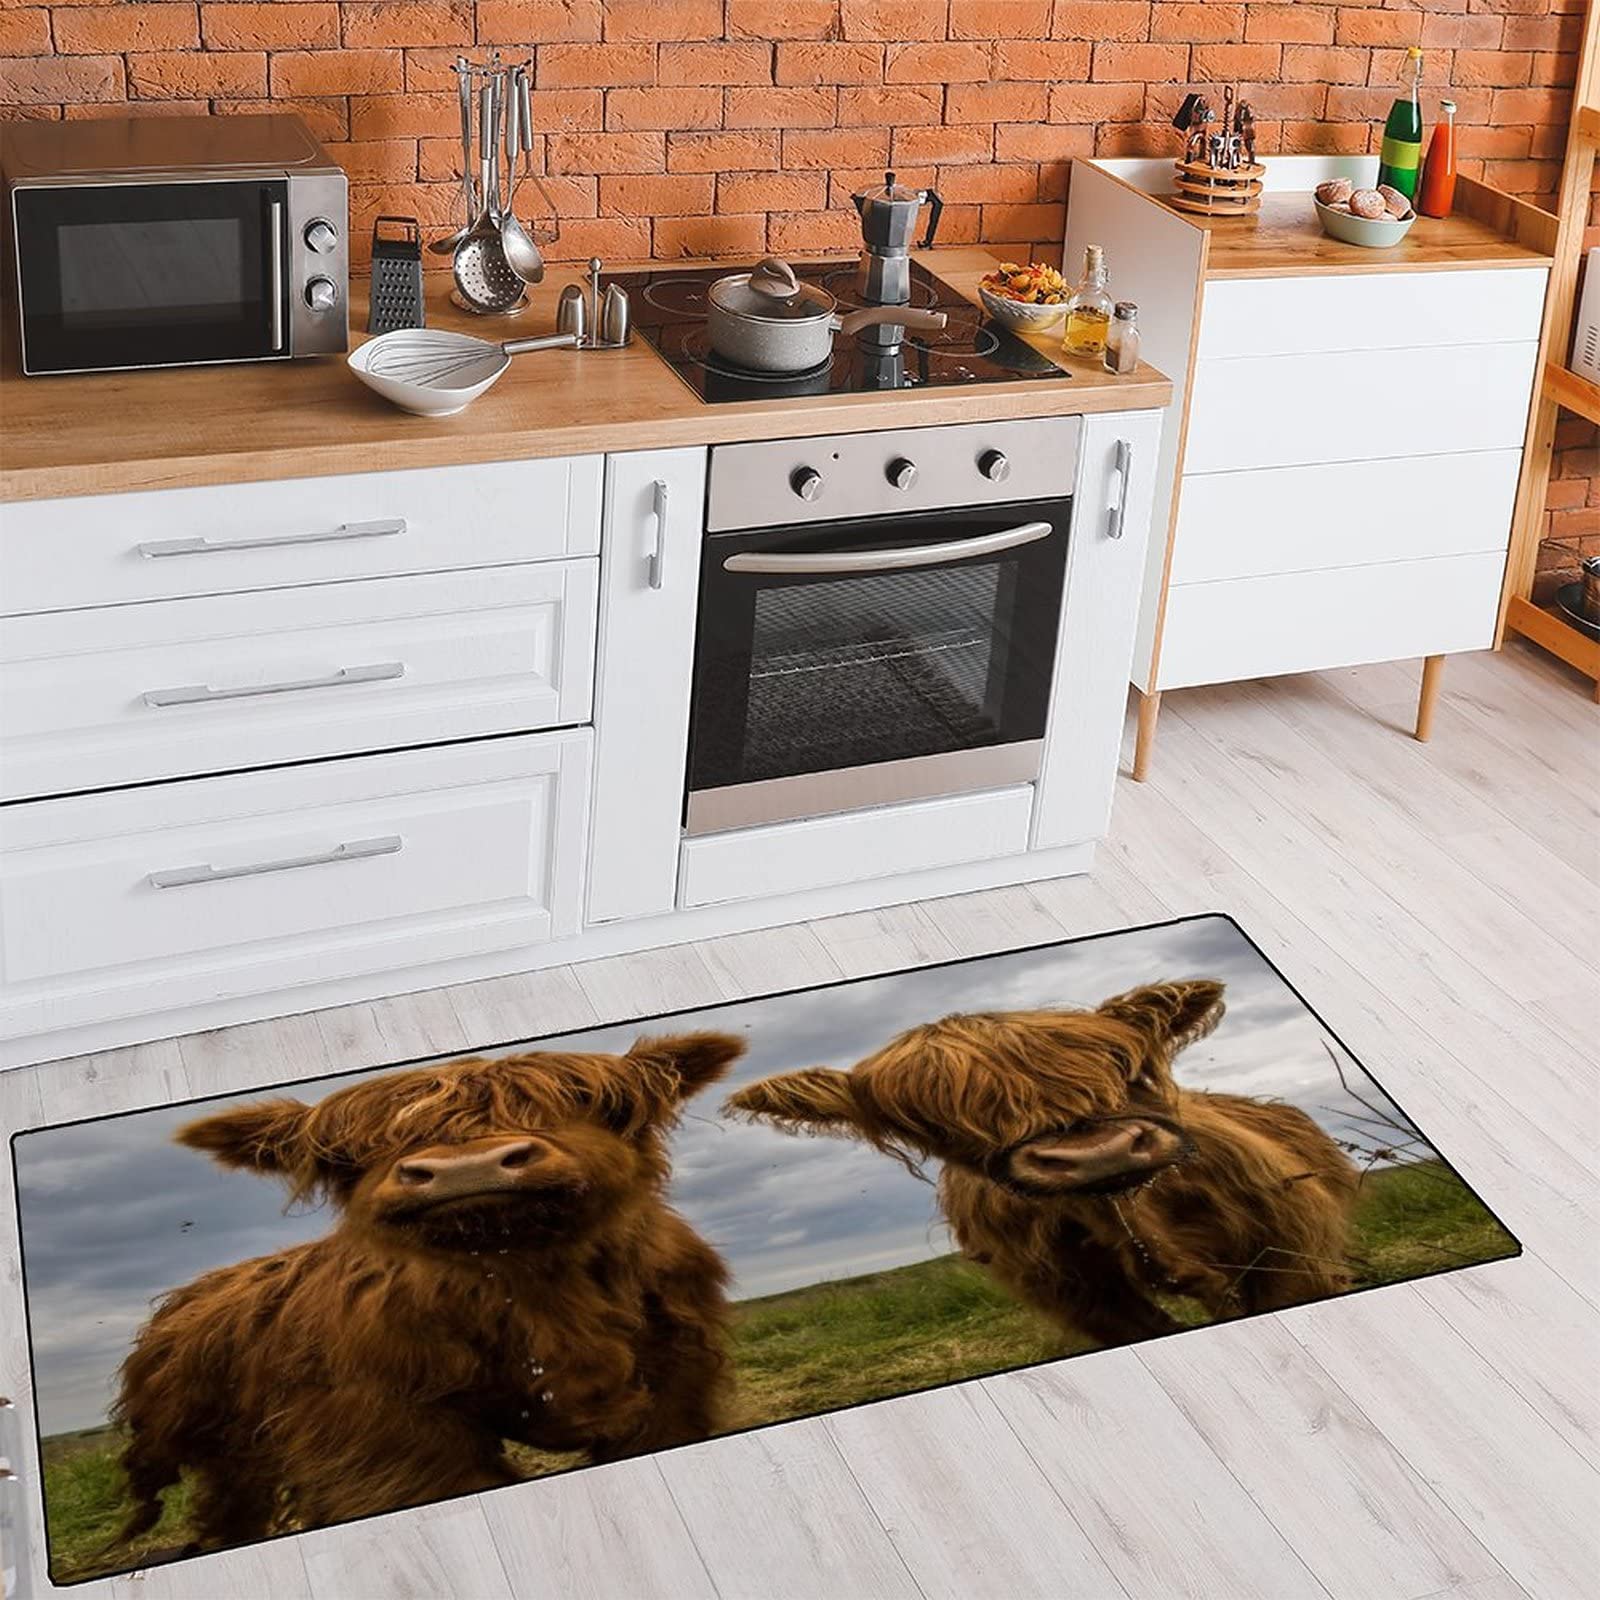 TsyTma Cute Wild Highland Cows Kitchen Rugs Floor Mats Washable Non-Slip Bathroom Rug Runner Kitchen mats for Floor Laundry Room Mat Western Kitchen Decor 39x20 Inch